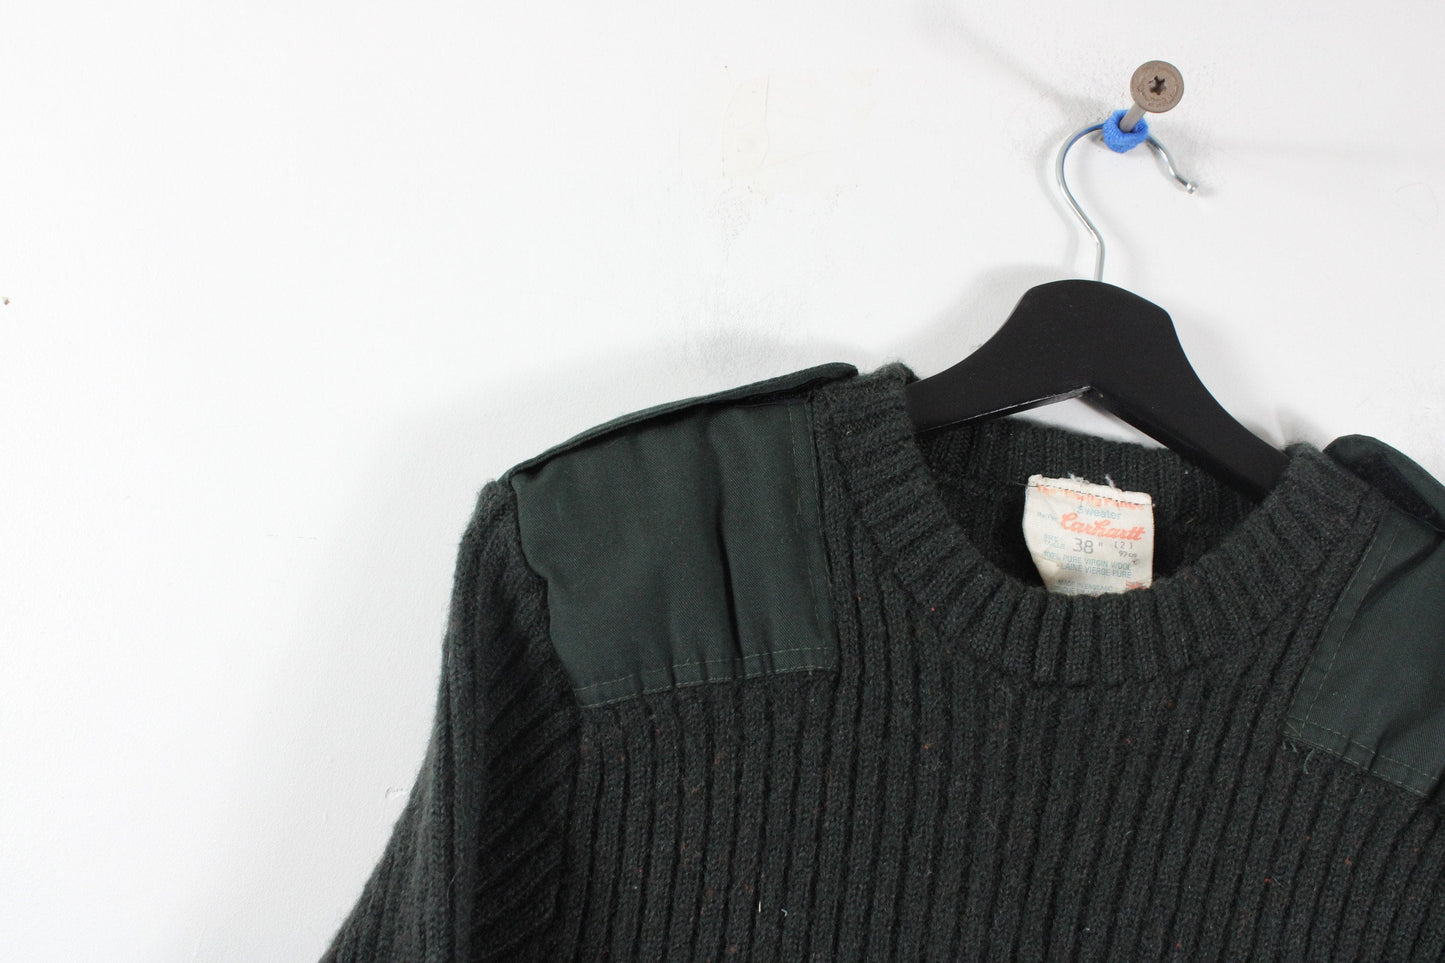 Carhartt Virgin-Wool Sweater / 60s Vintage Cable-Knit Sweatshirt / 1960s Work Wear Utility / Heavy Construction Clothing